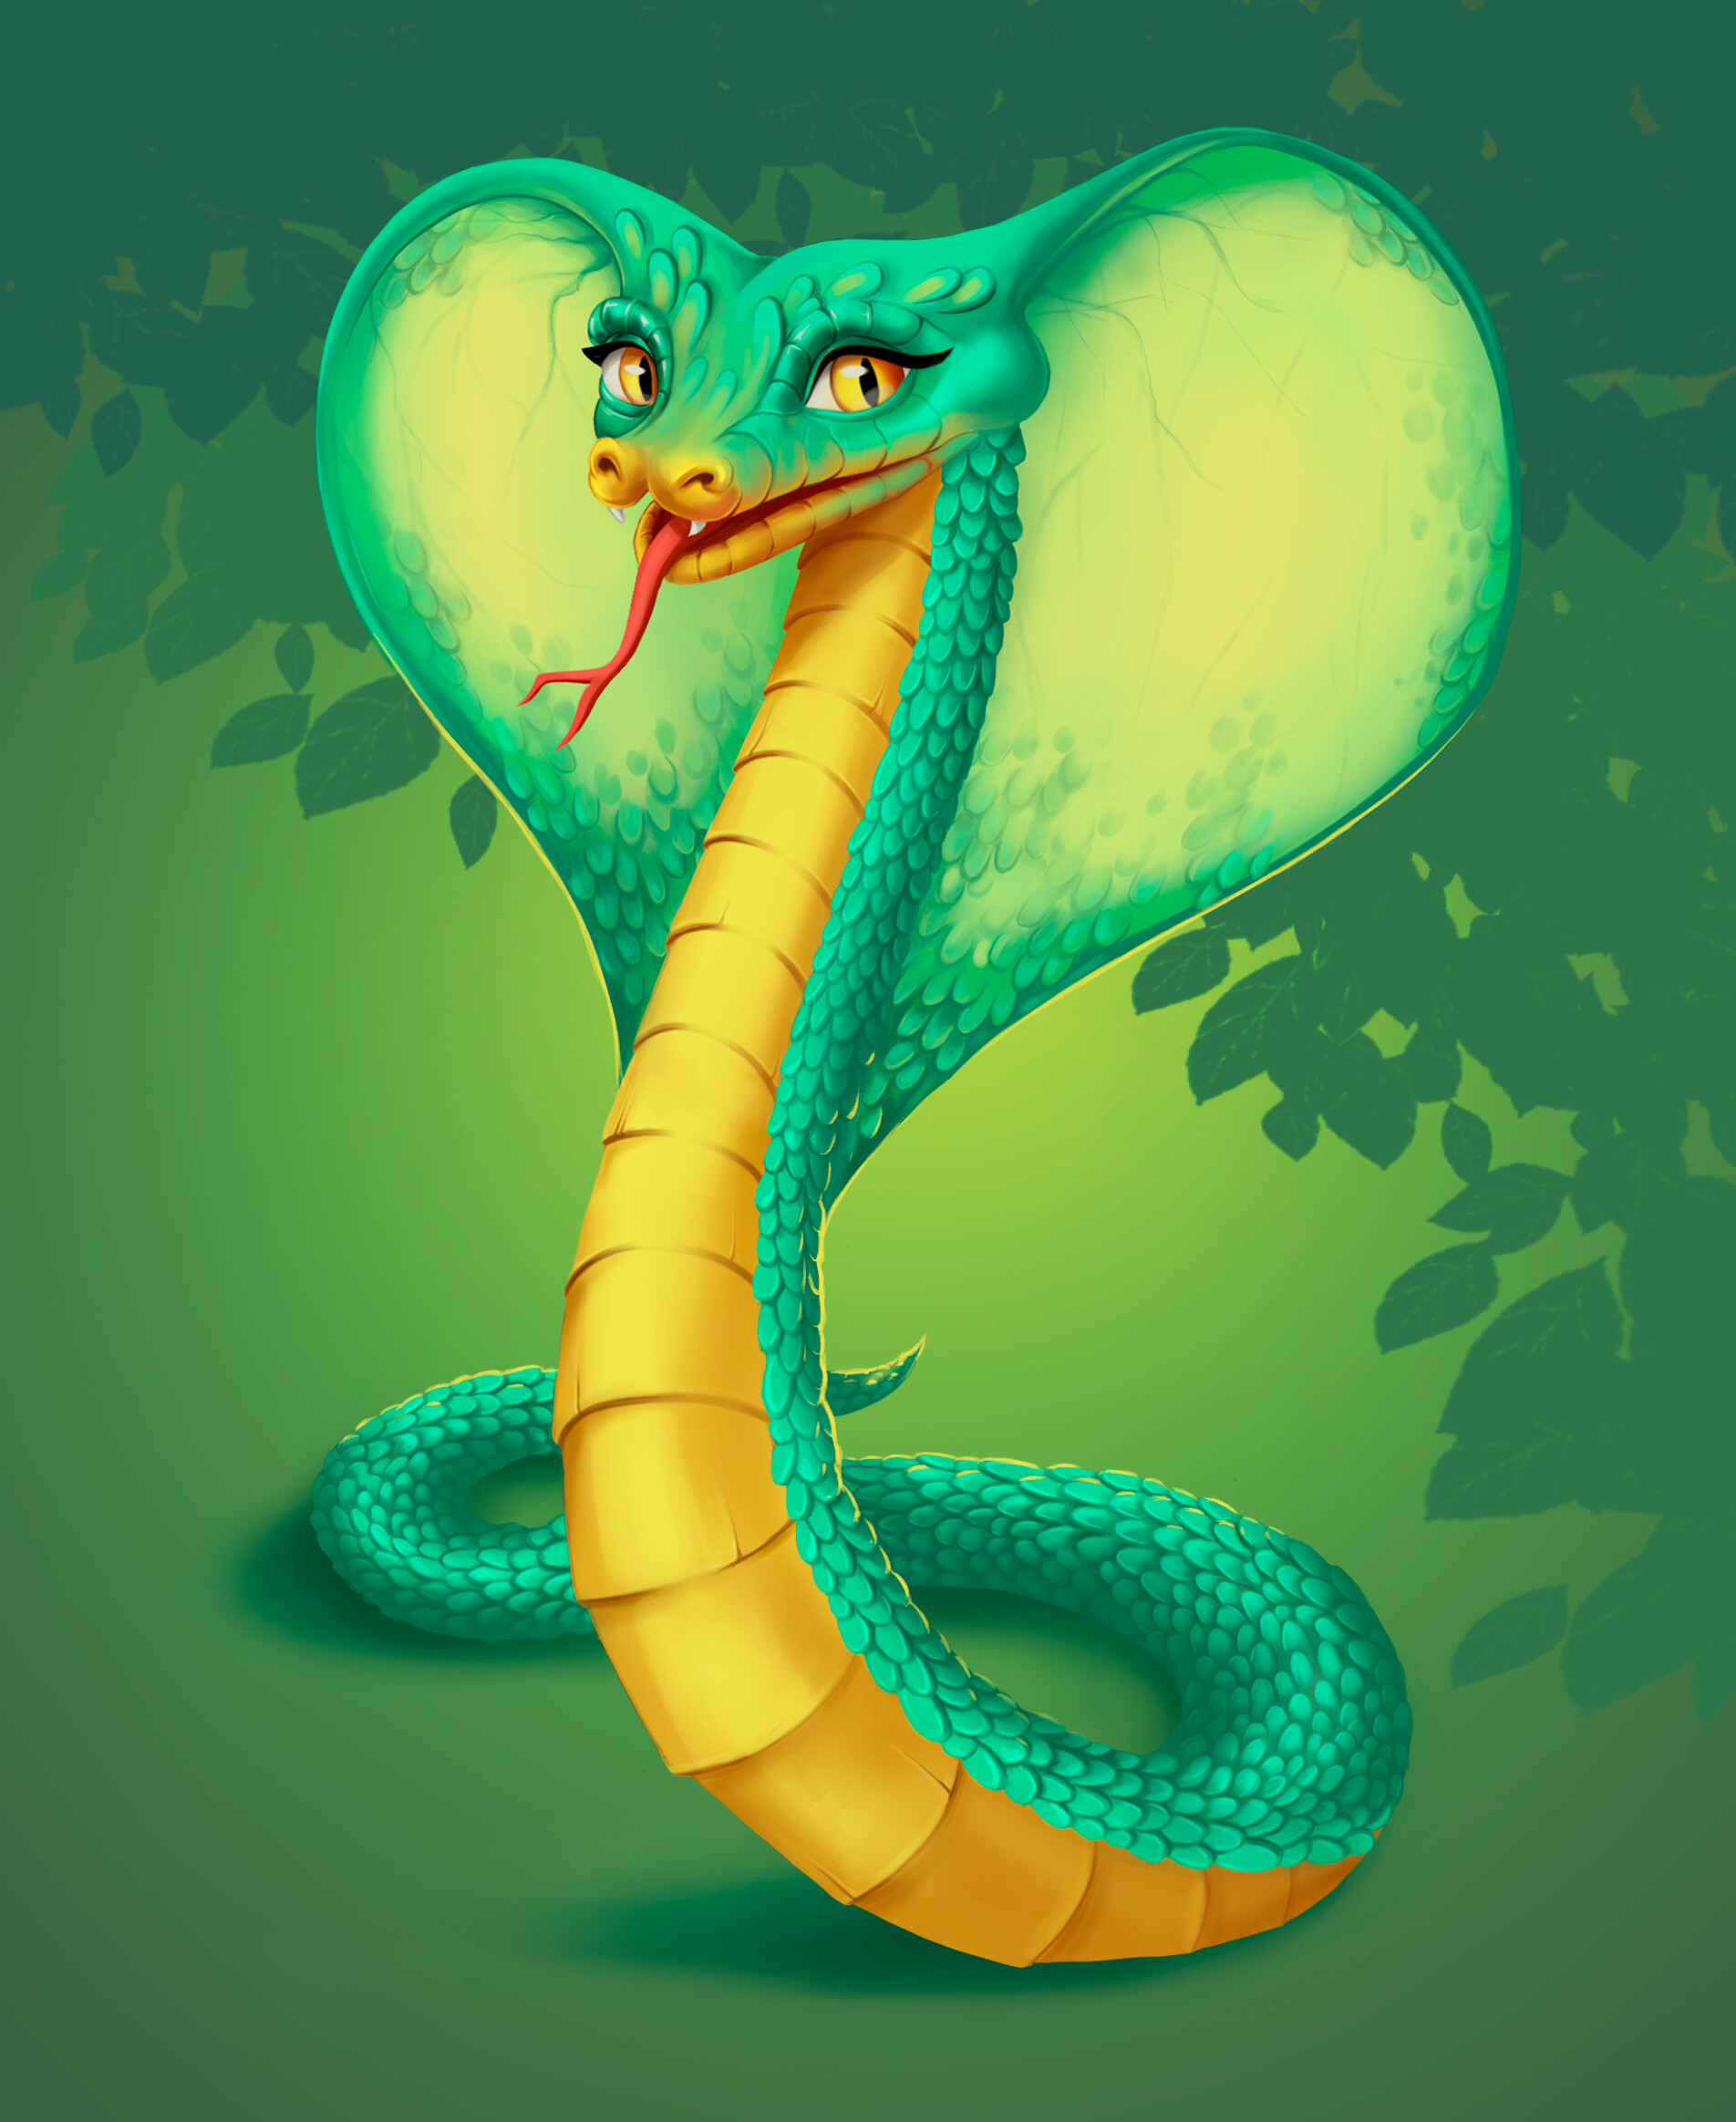 ArtStation - Cute snake